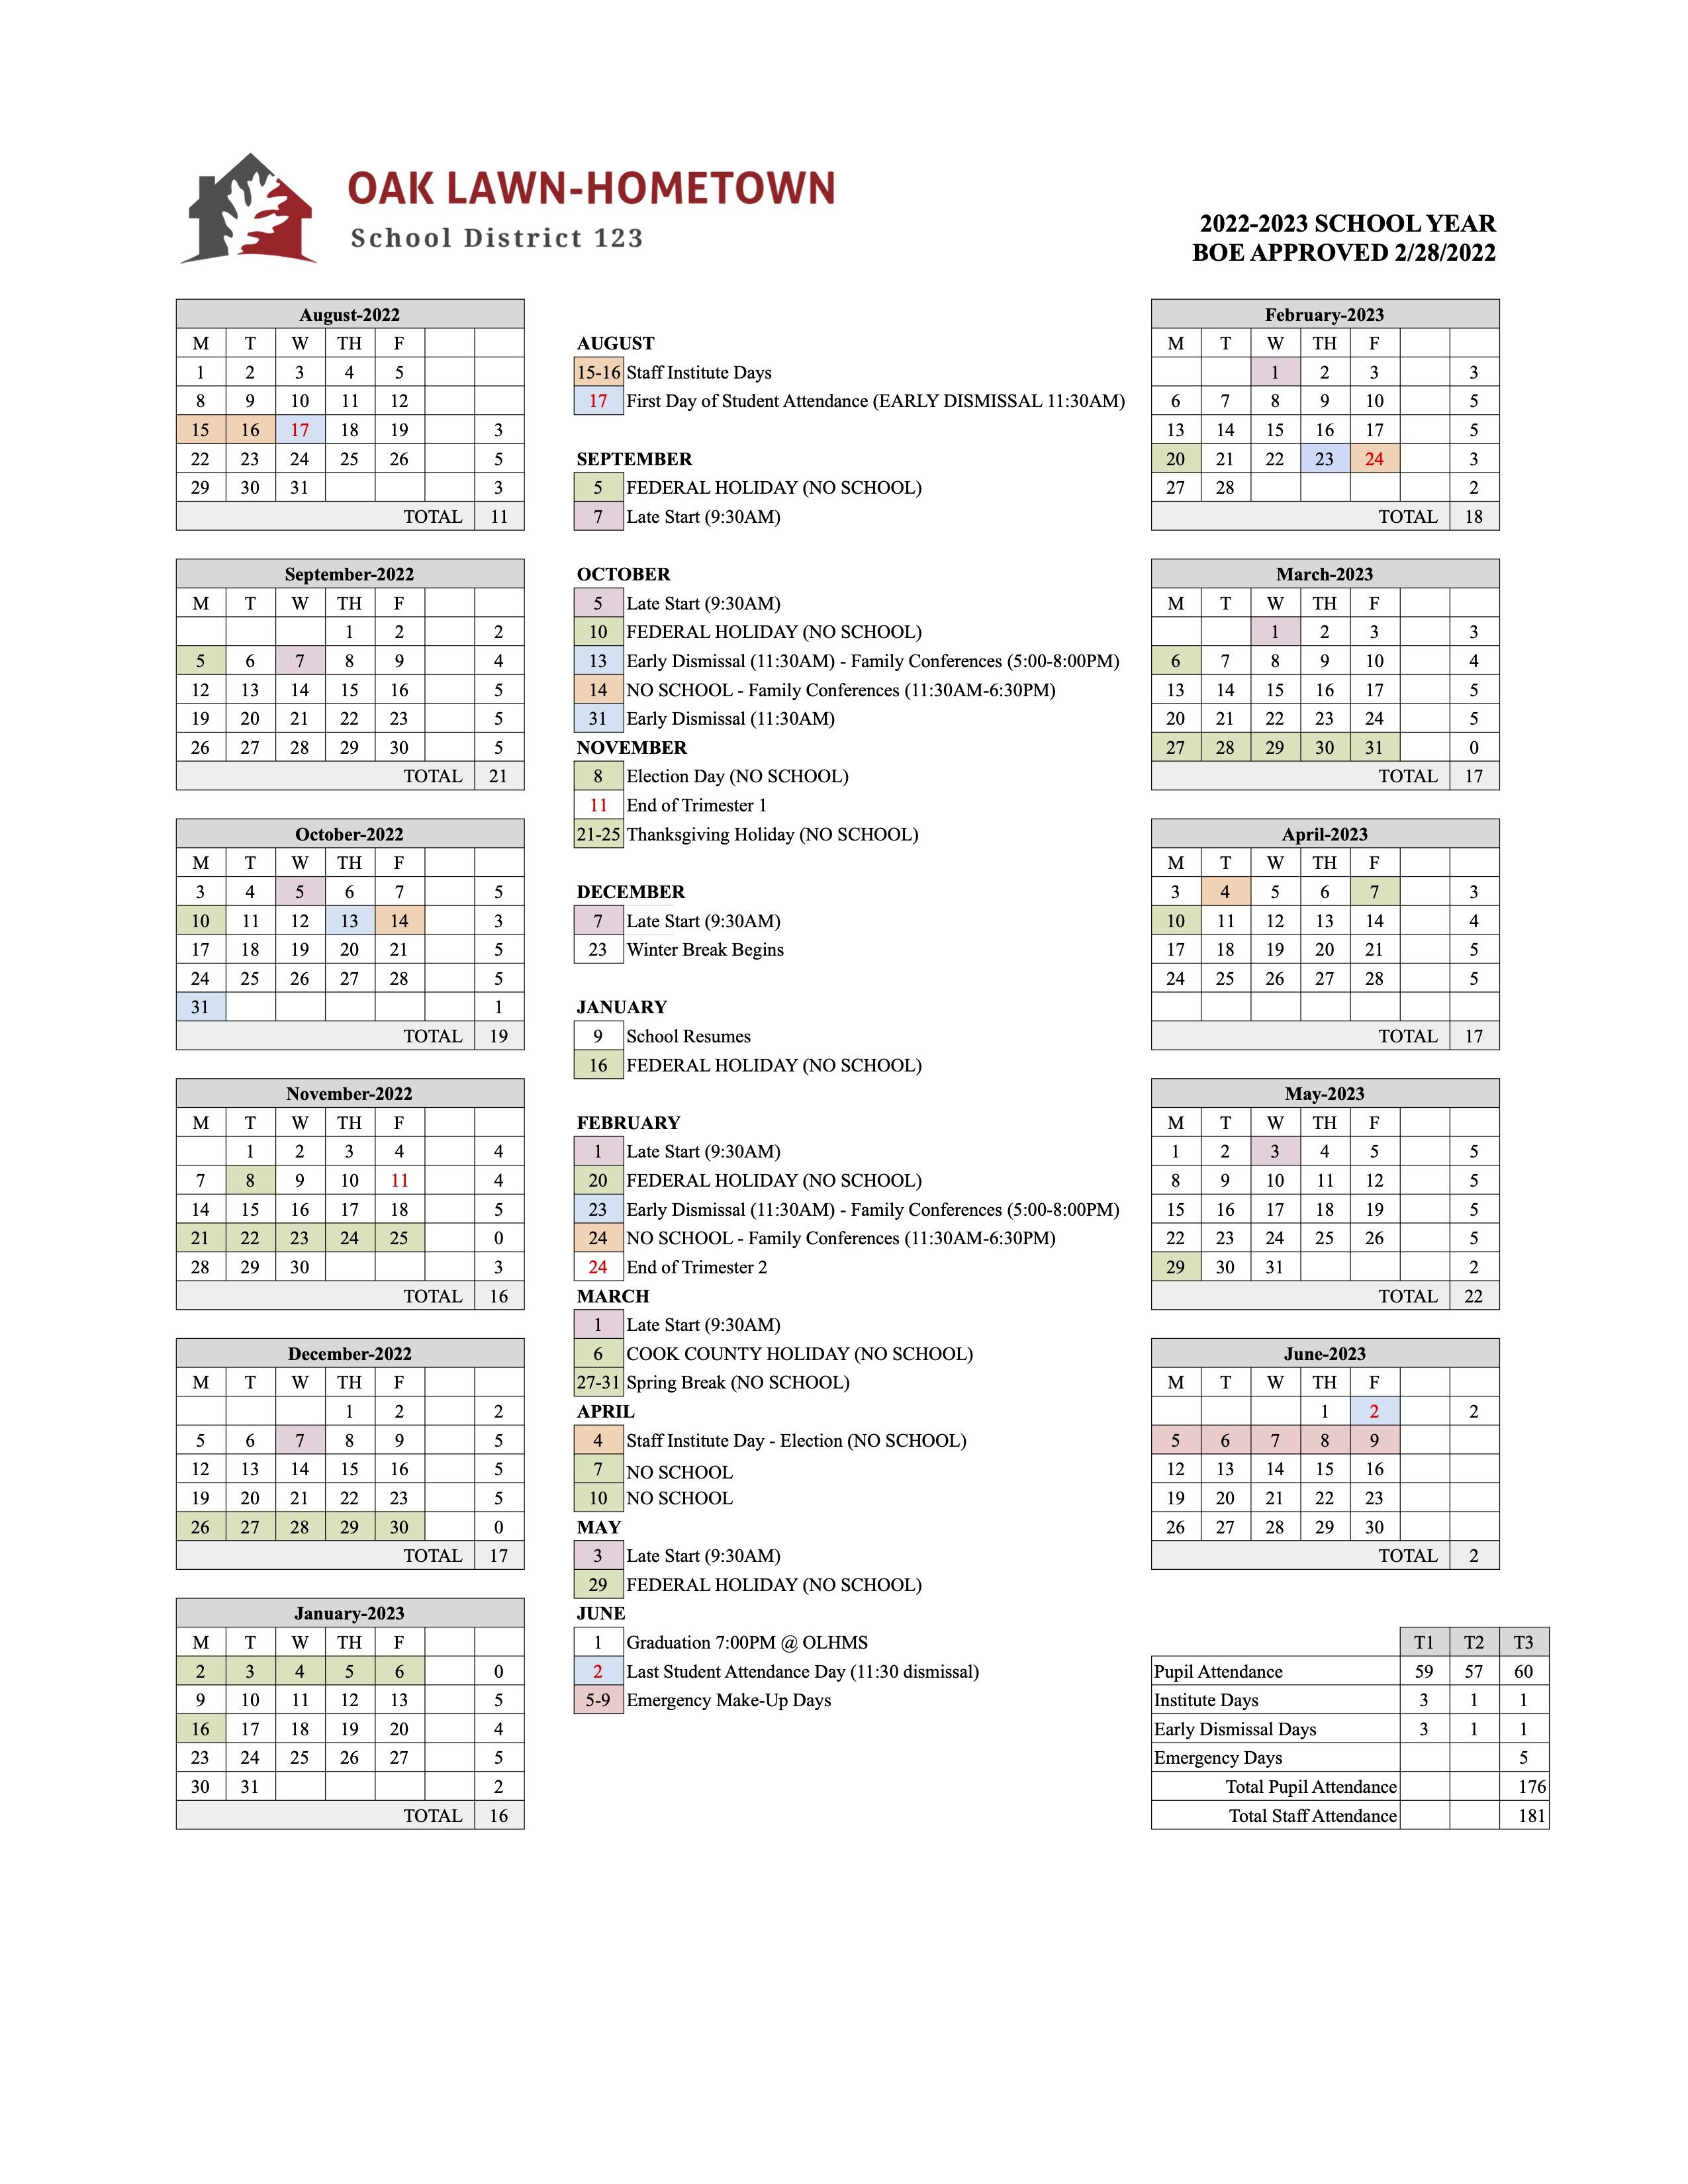 Depaul University Calendar 2022 Hza9Hob2C-Jkgm